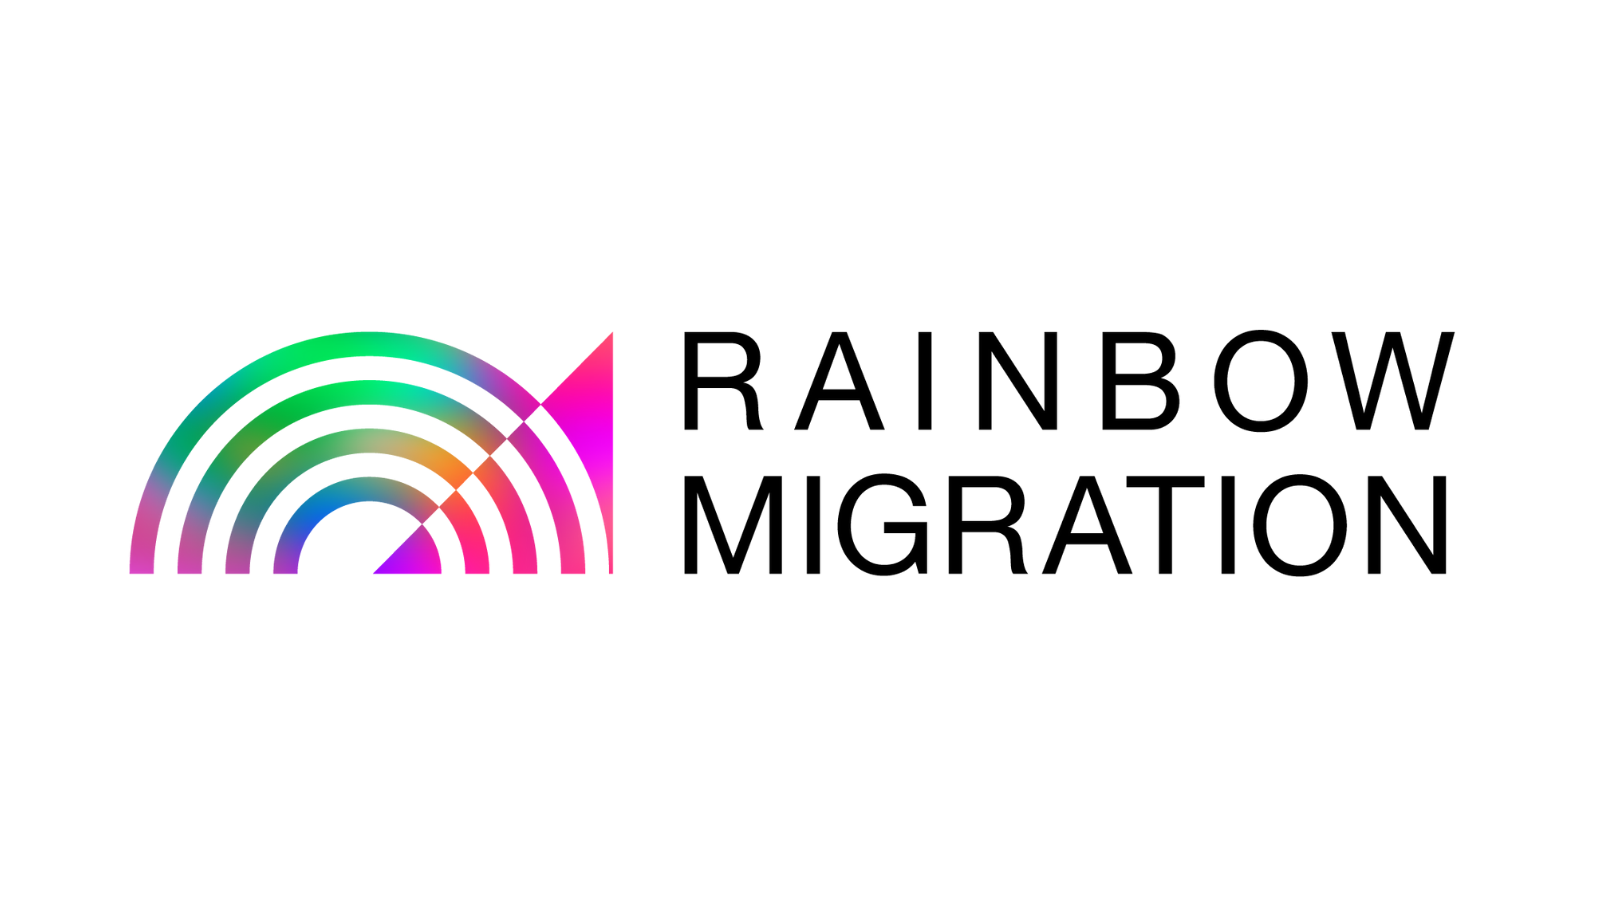 Rainbow migration logo on a white background.